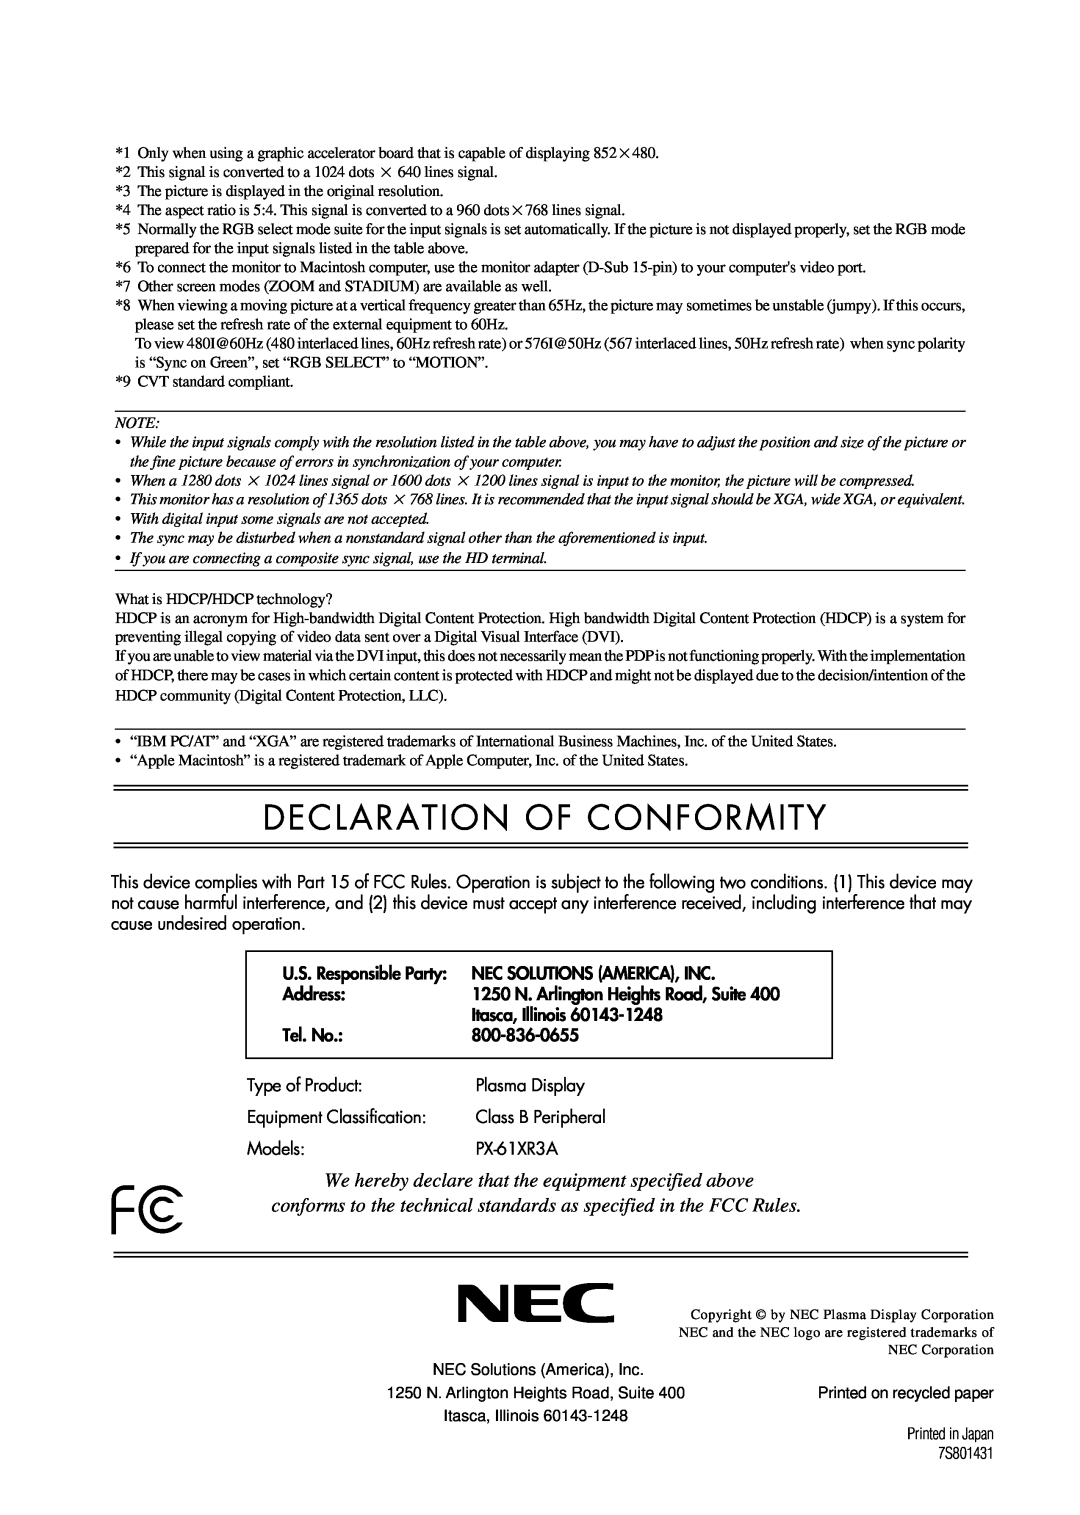 NEC PX-61XR3A operation manual Declaration Of Conformity 